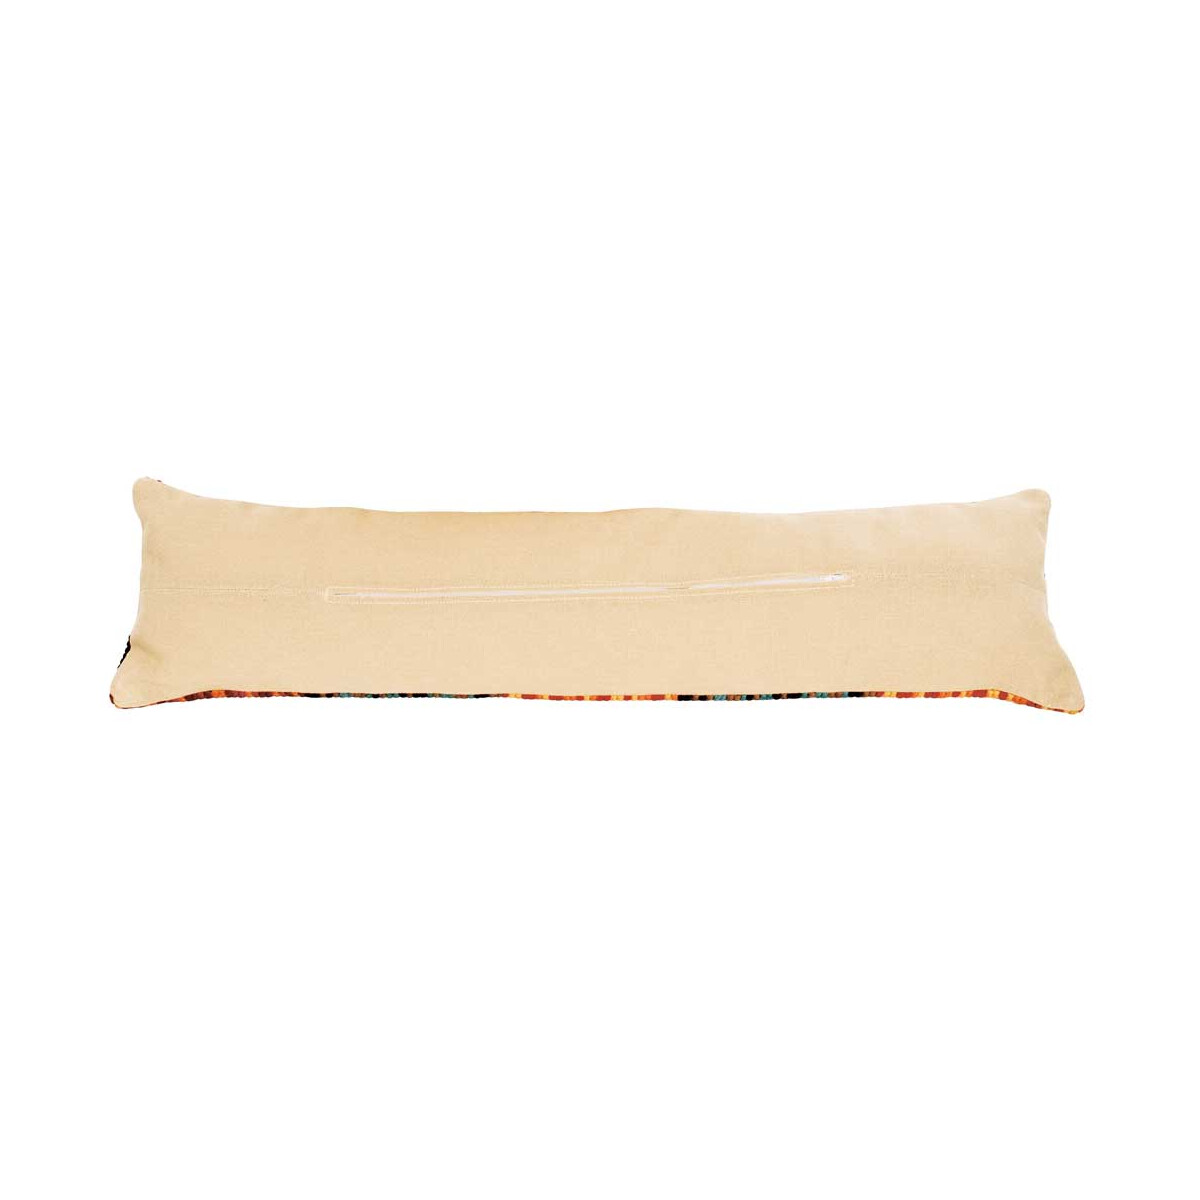 Vervaco подушка валик от сквозняков 85 x 25 см, Ecru